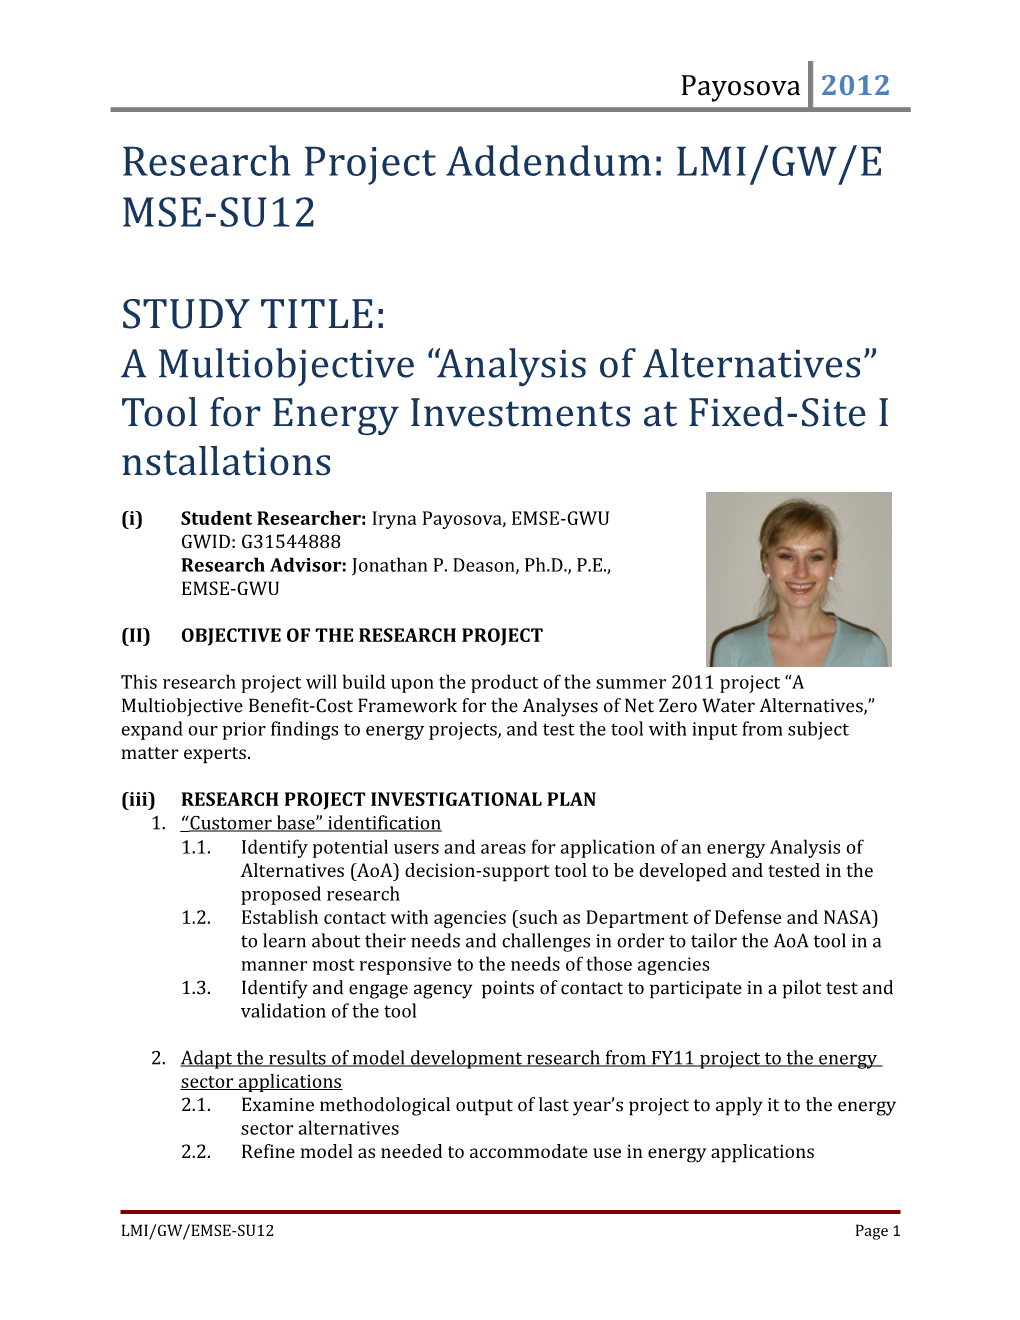 Research Project Addendum: LMI/GW/EMSE-SU12